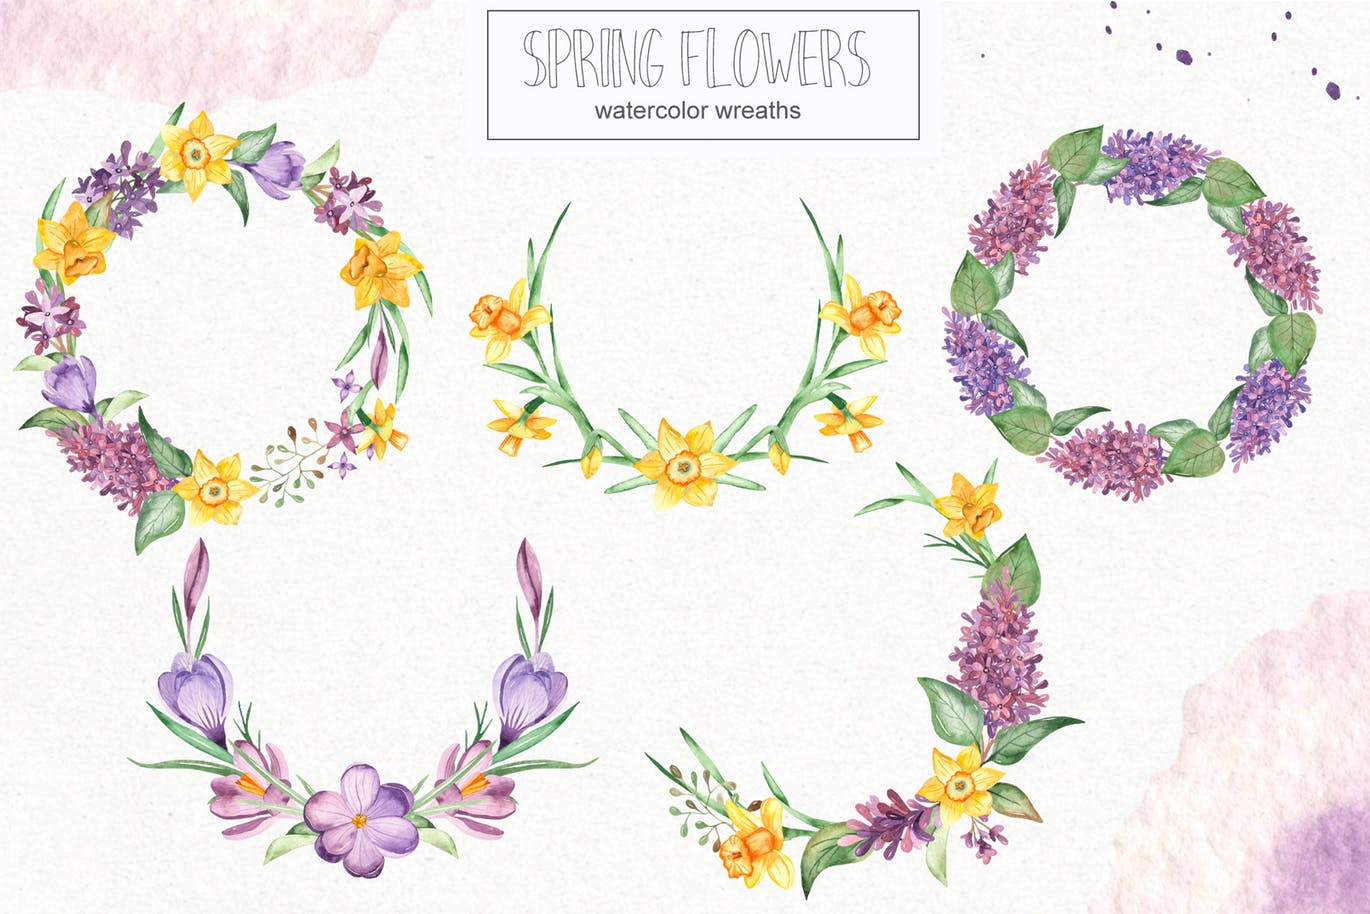 春季花卉水彩素材套装 Watercolor spring flowers collection插图(4)